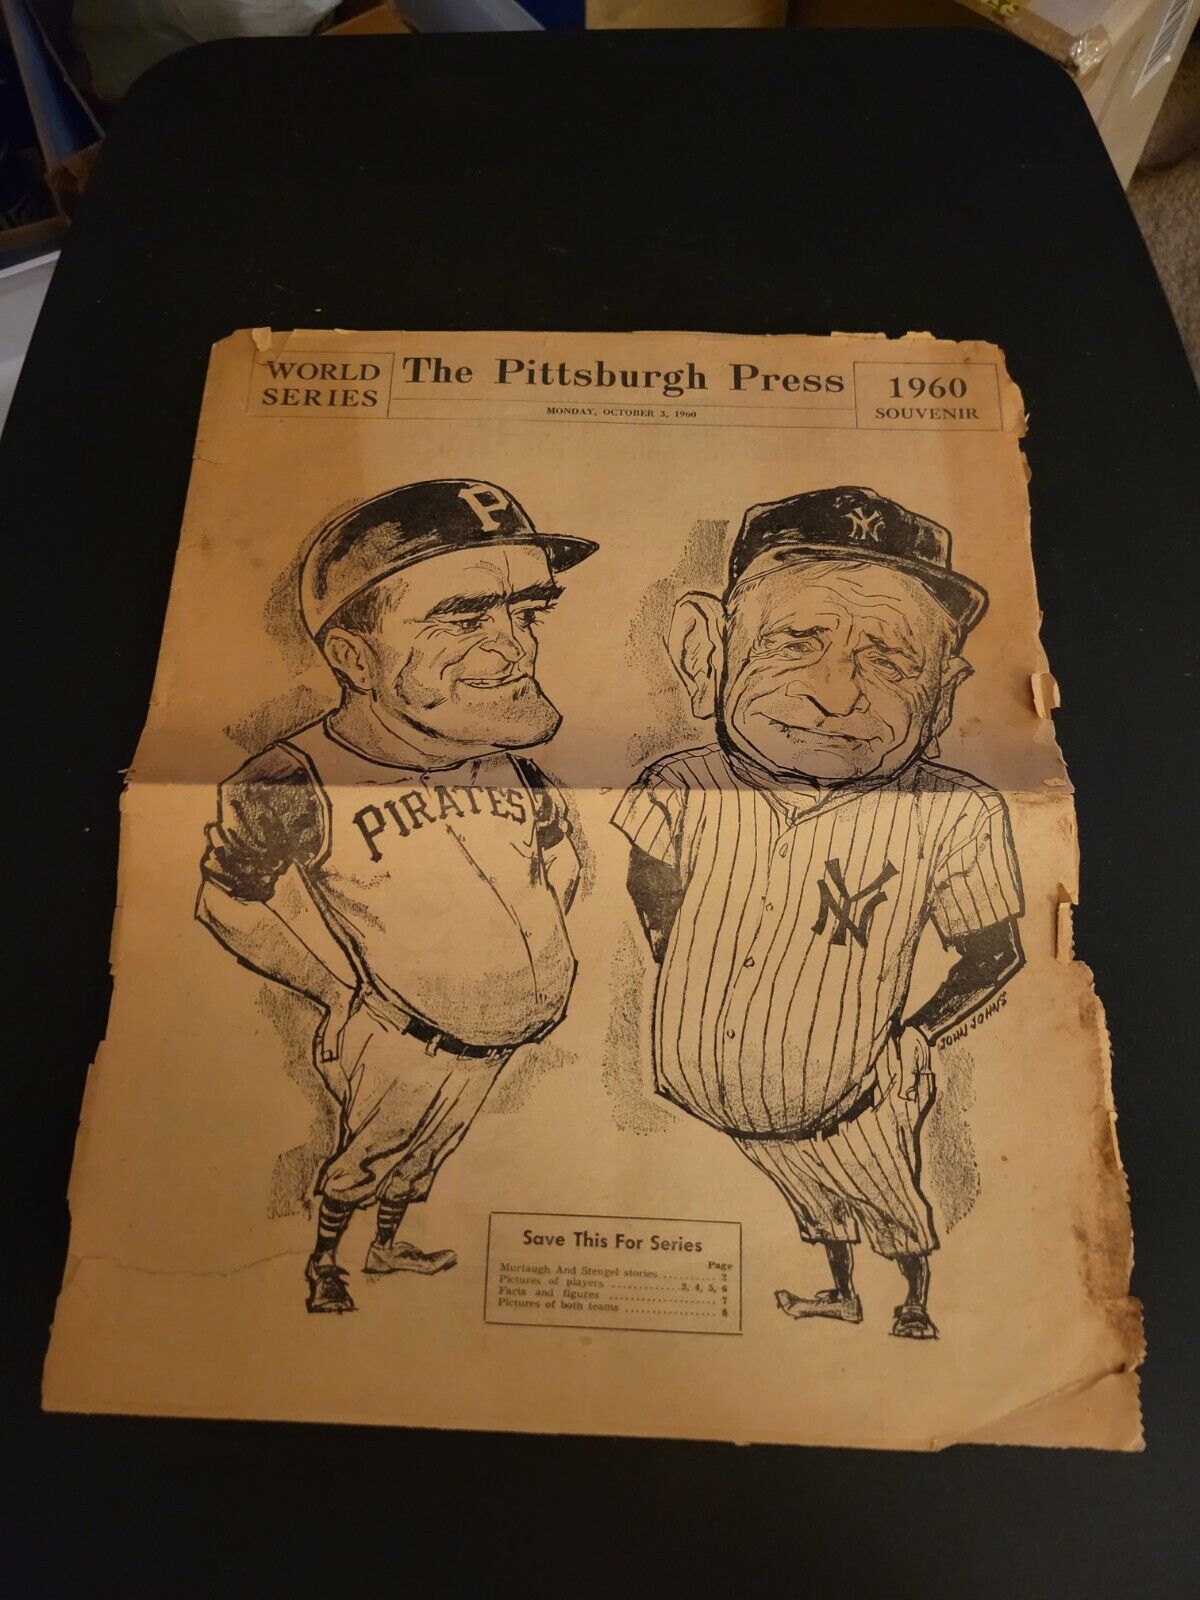 The Pittsburgh Press 1960 World Series Souvenir Edition